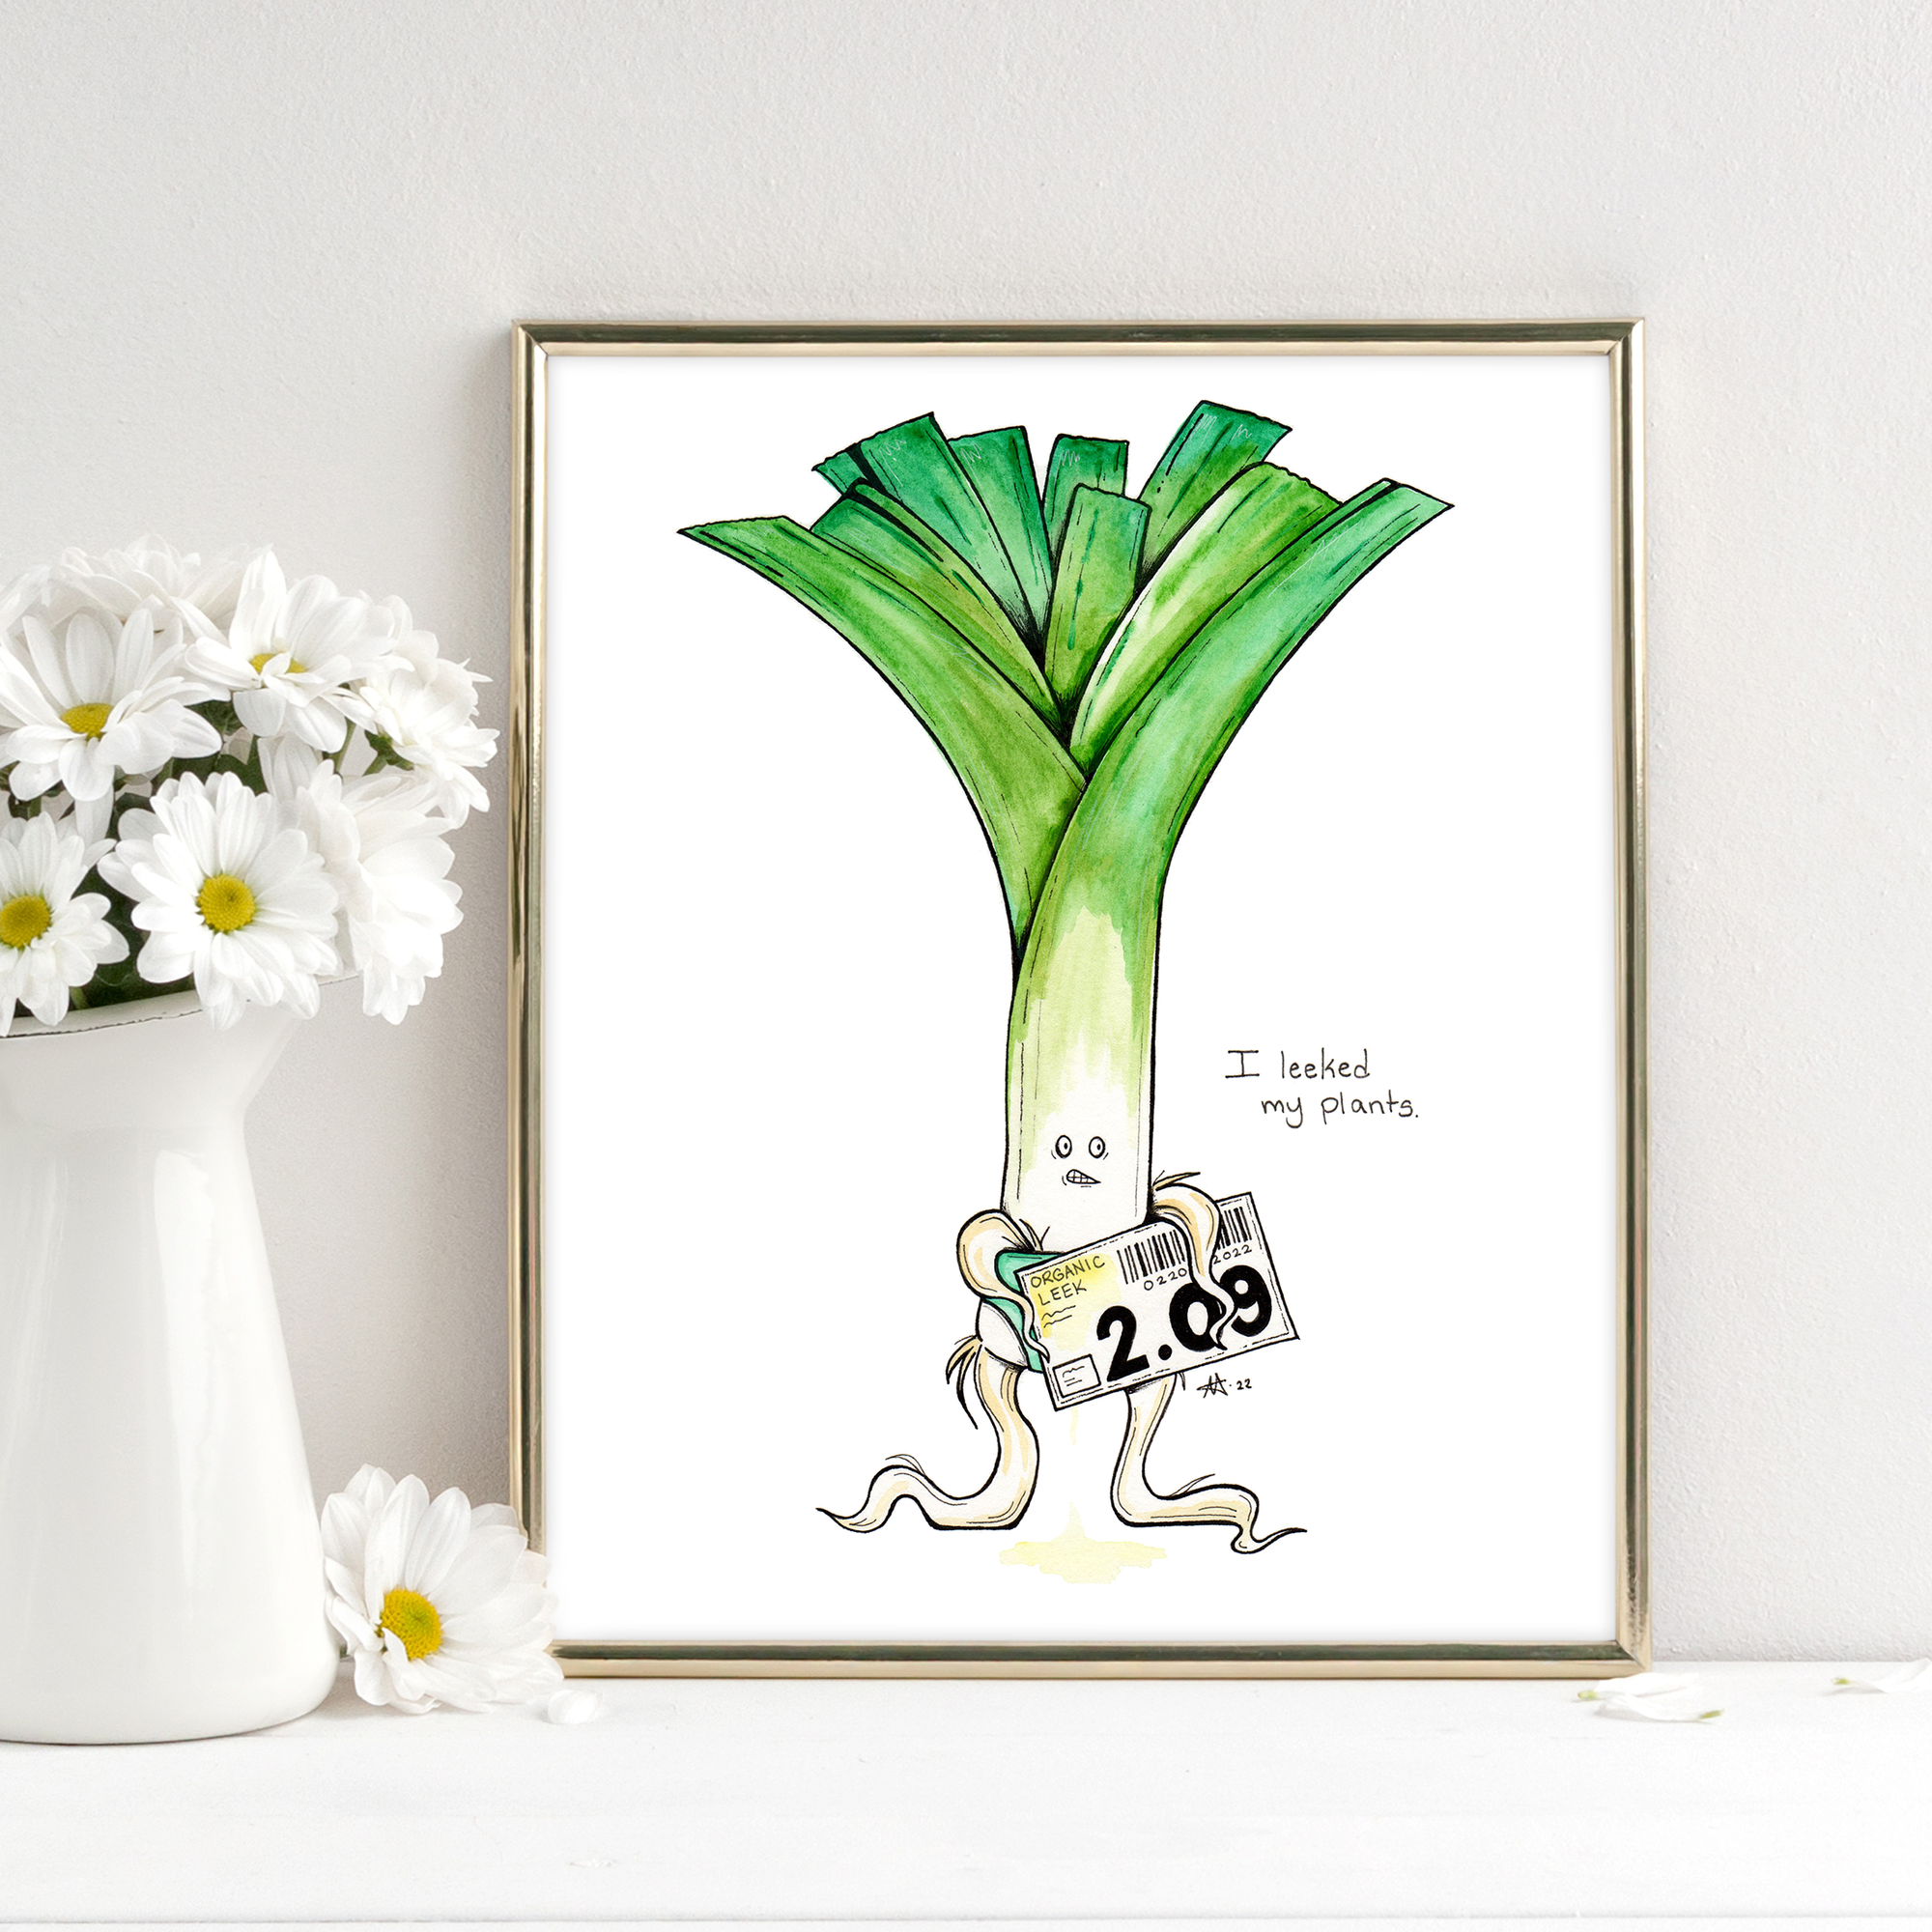 "I leeked my plants." - Fine Art Print